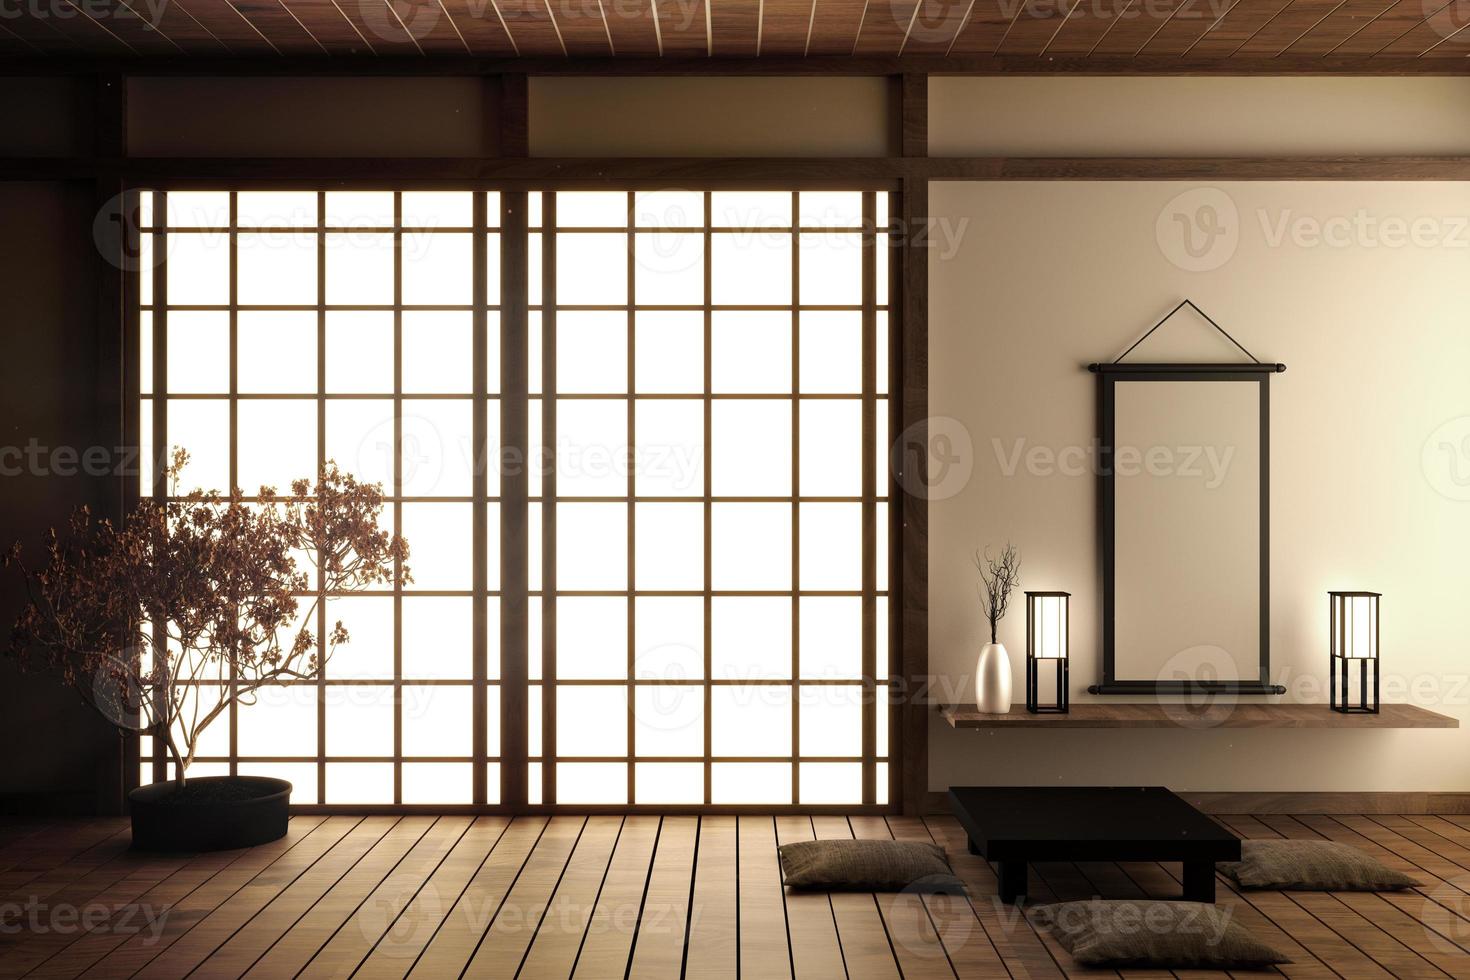 Japanse woonkamer met houten vloer en witte muur met decoratie Japanse stijl, 3D-rendering foto